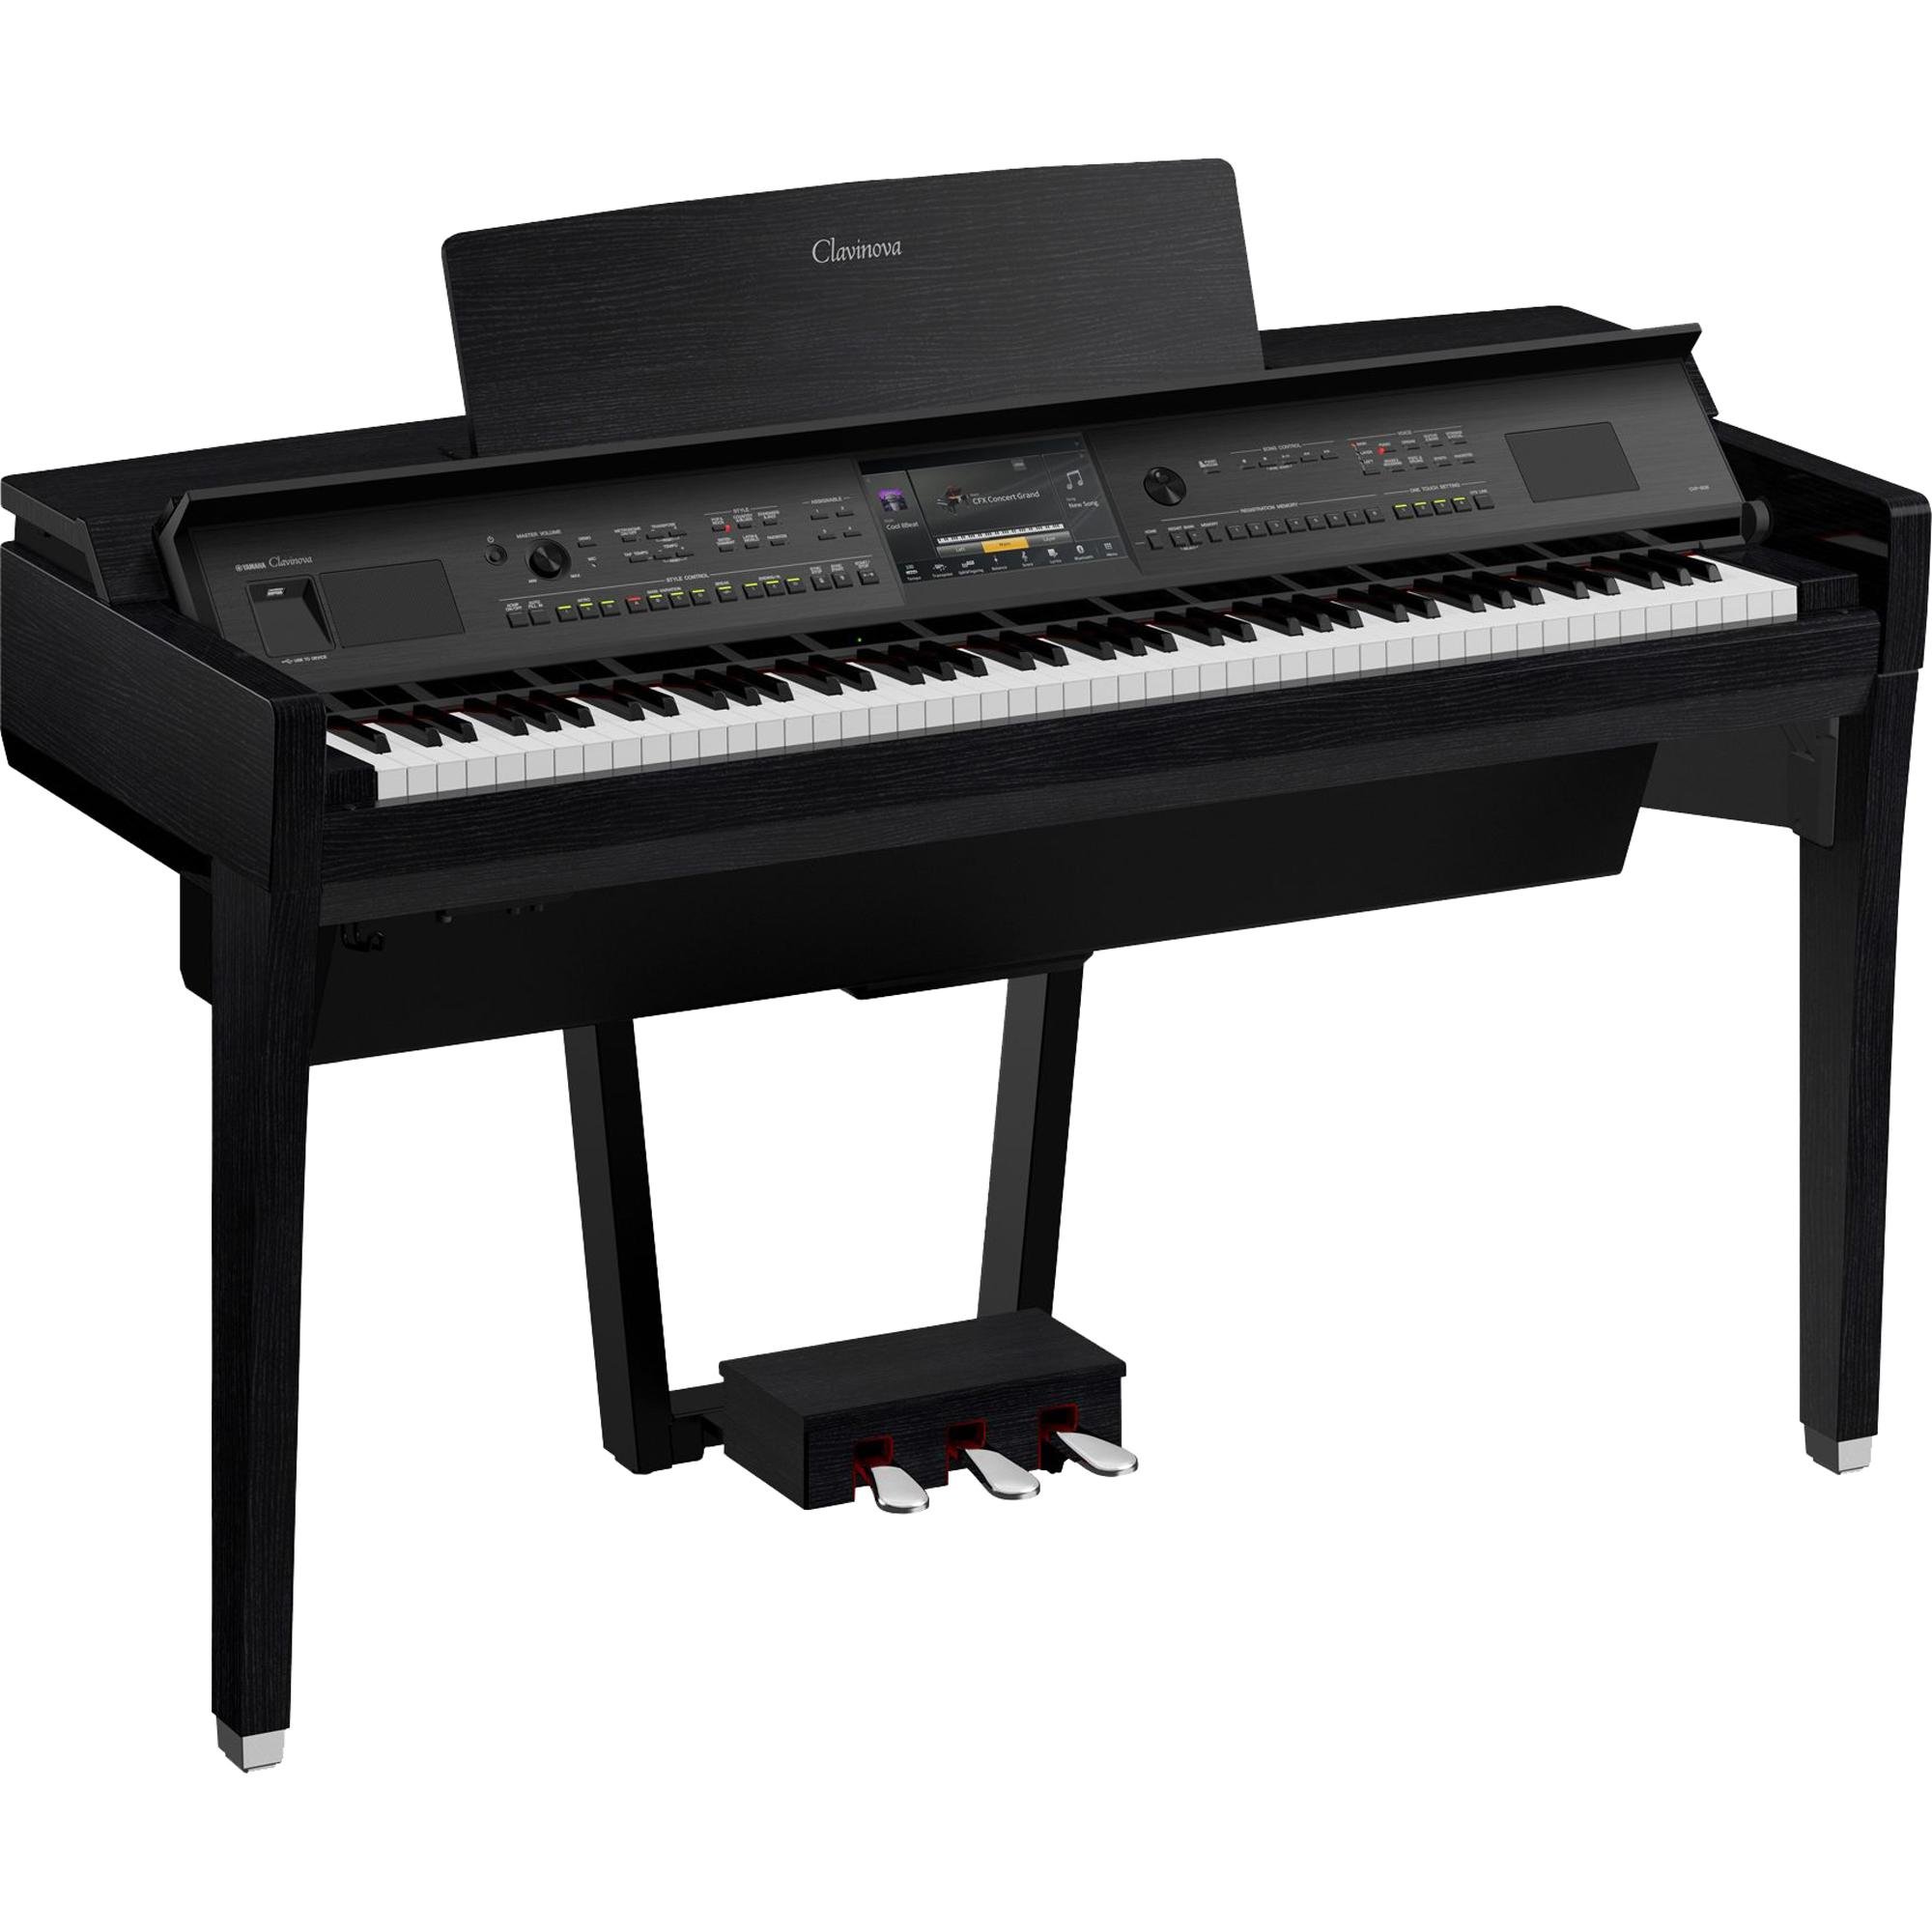 Piano Digital Yamaha CVP809 Preto Fosco